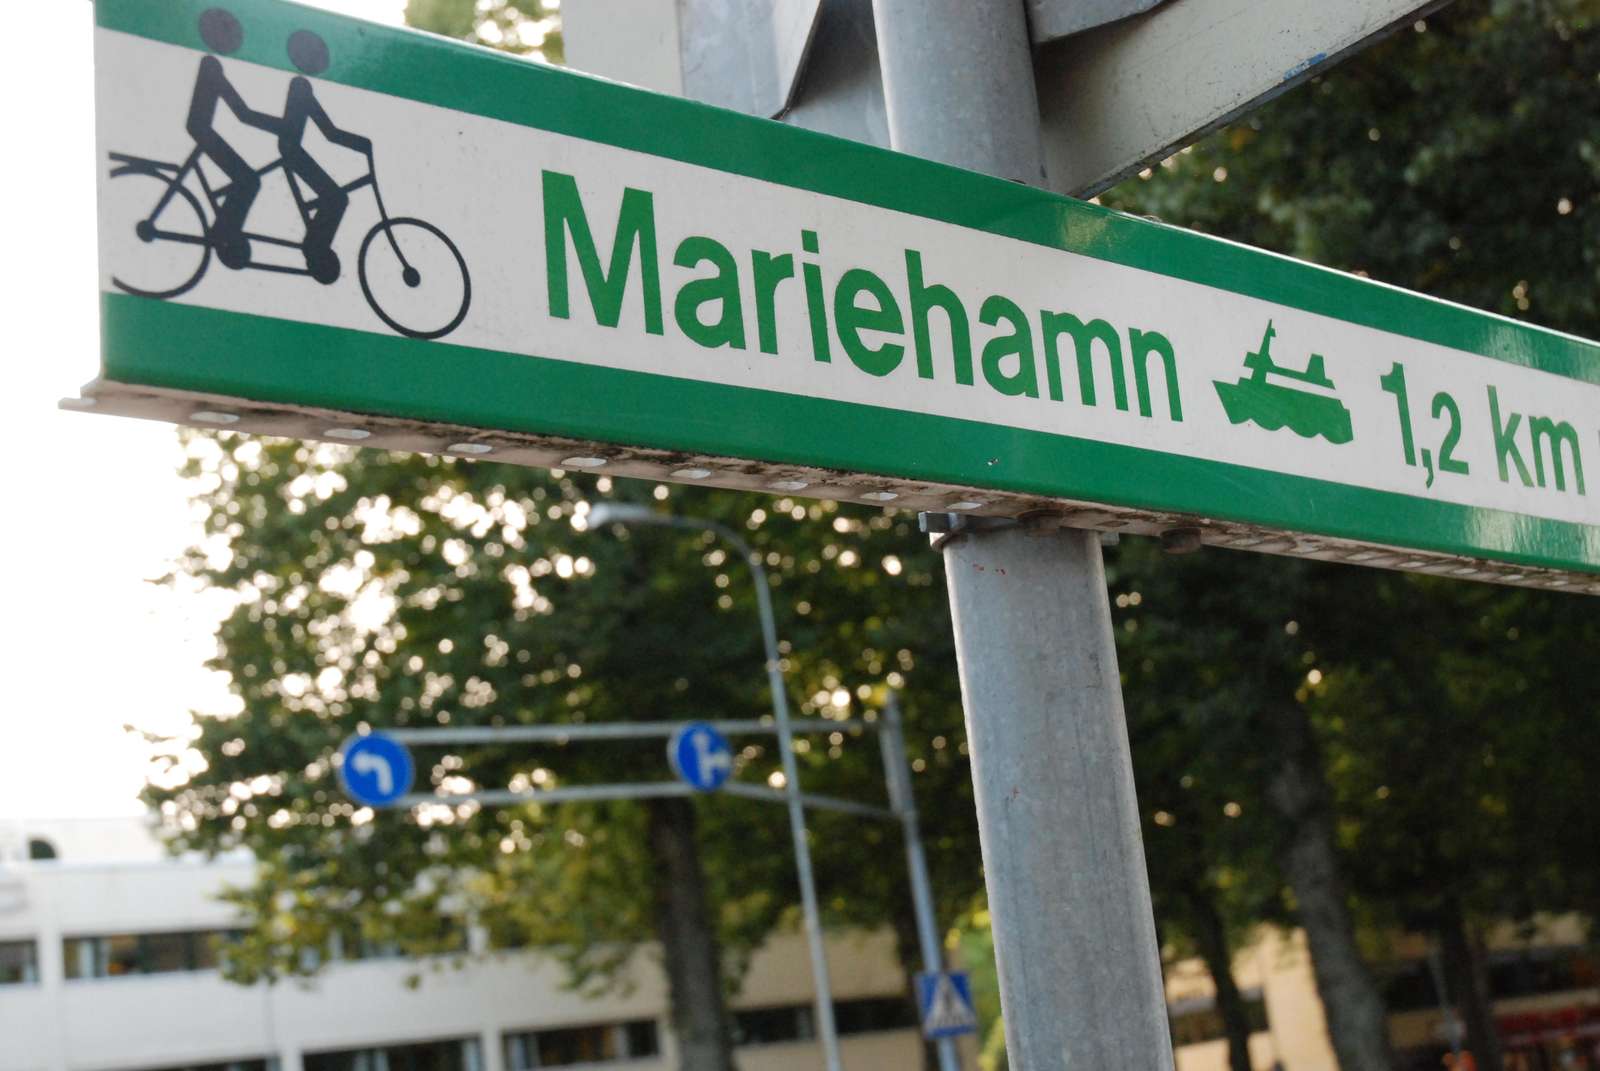 Mariehamn (sign)